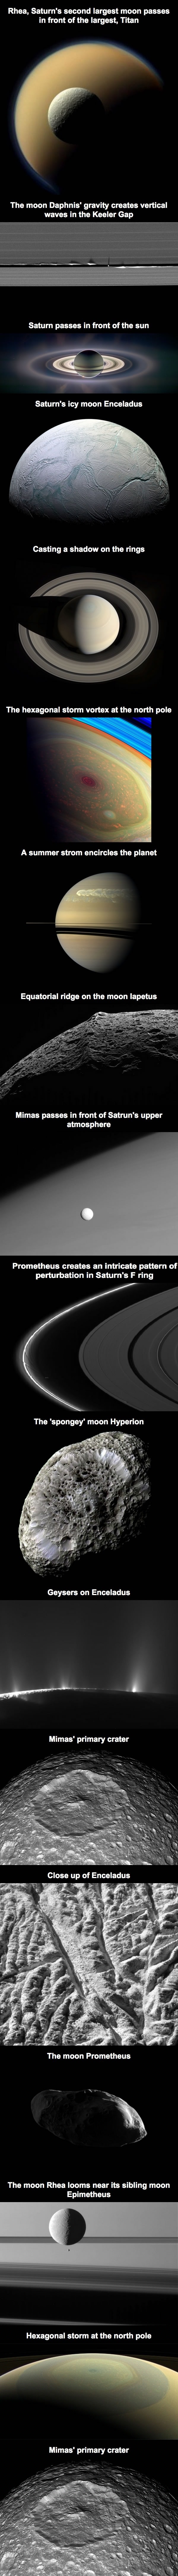 NASA's Cassini probe photos